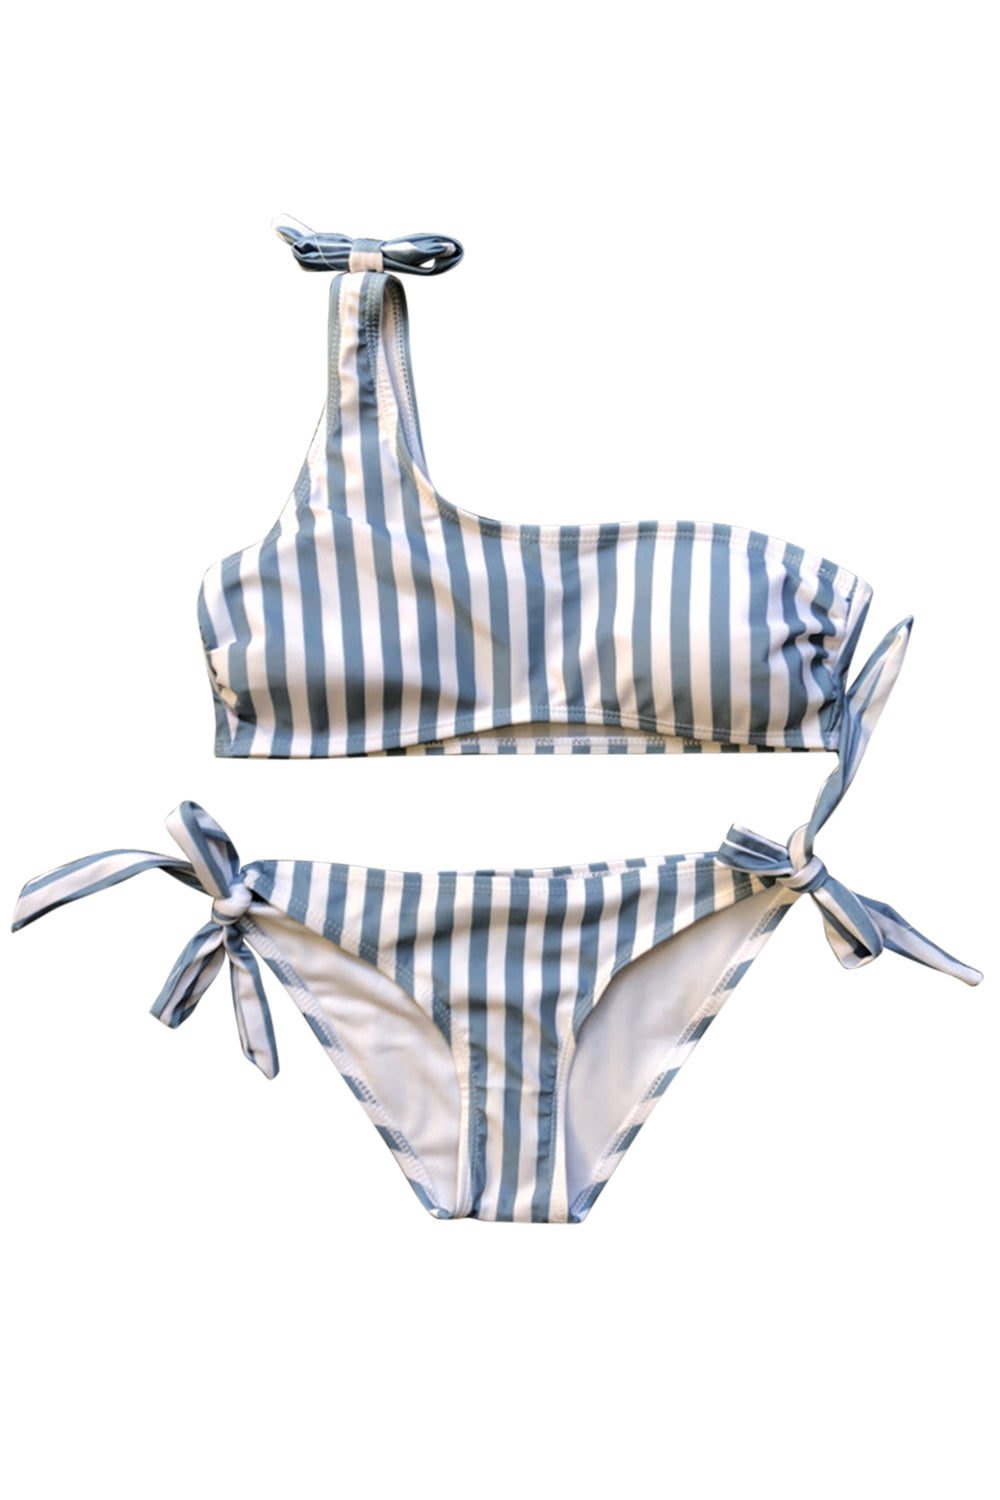 Iyasson Sky Blue Stripe Printing One-shoulder Bikini Sets